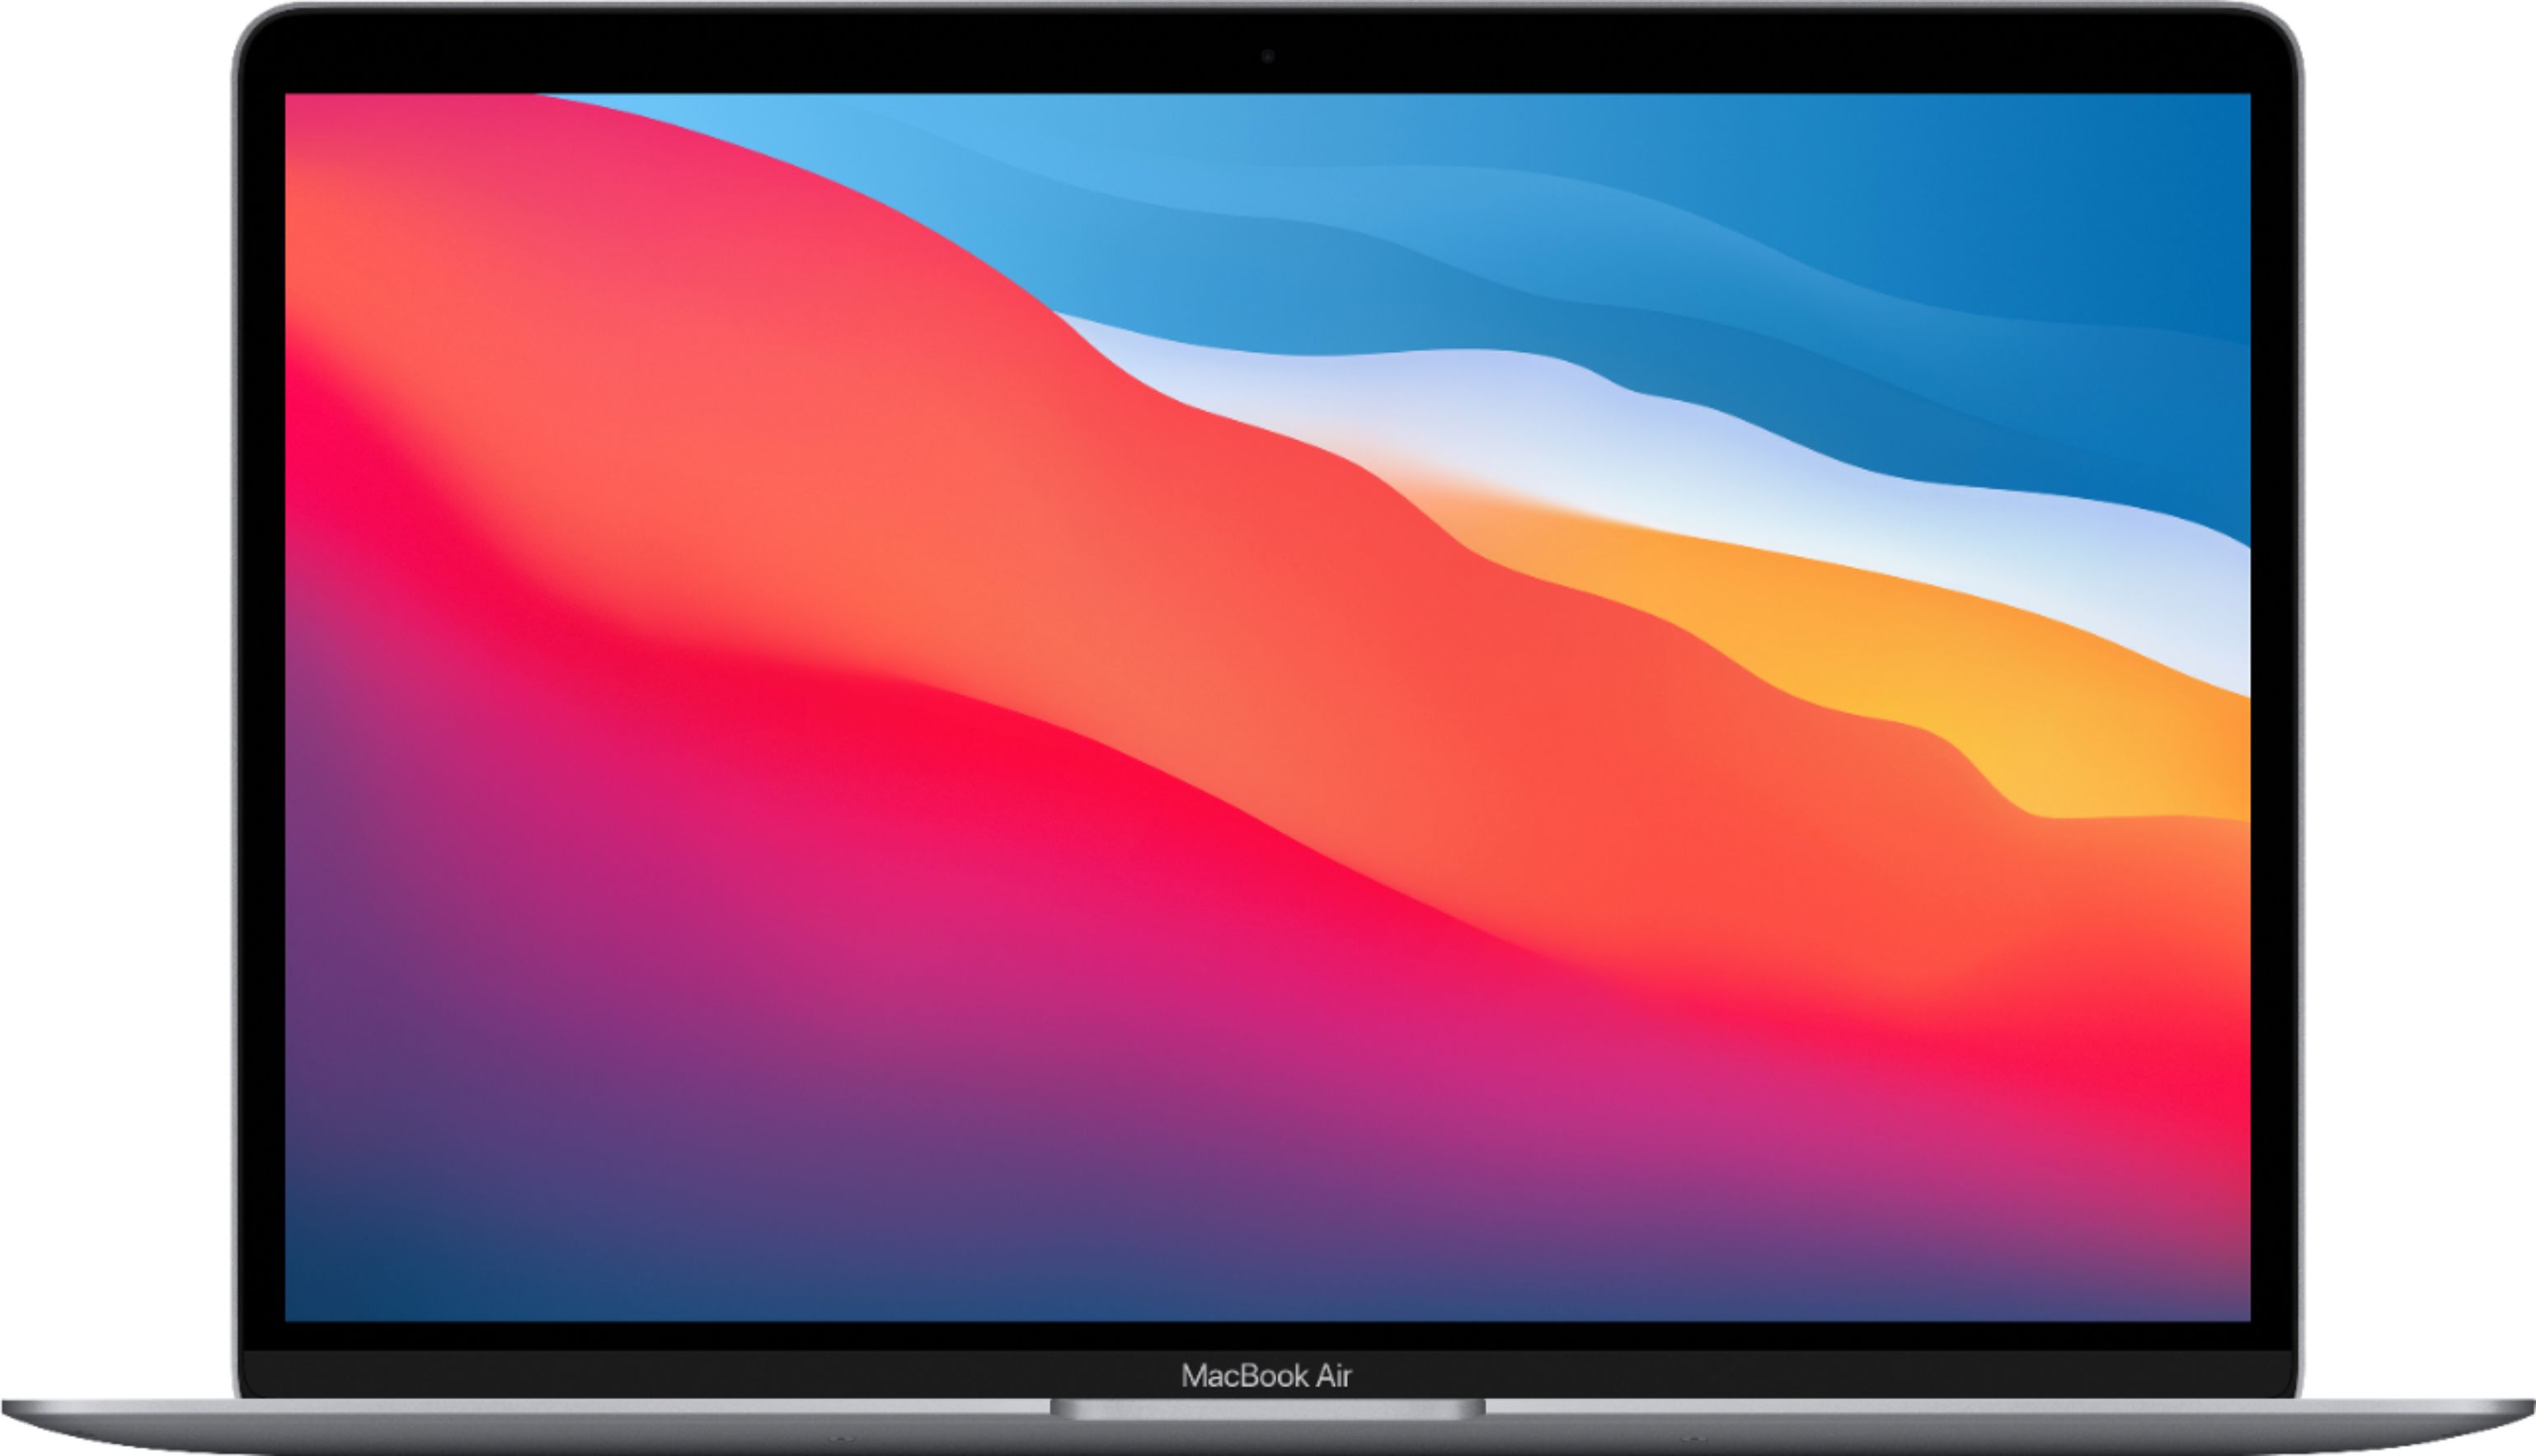 Latest macbook by apple lightroom 4 update for retina display